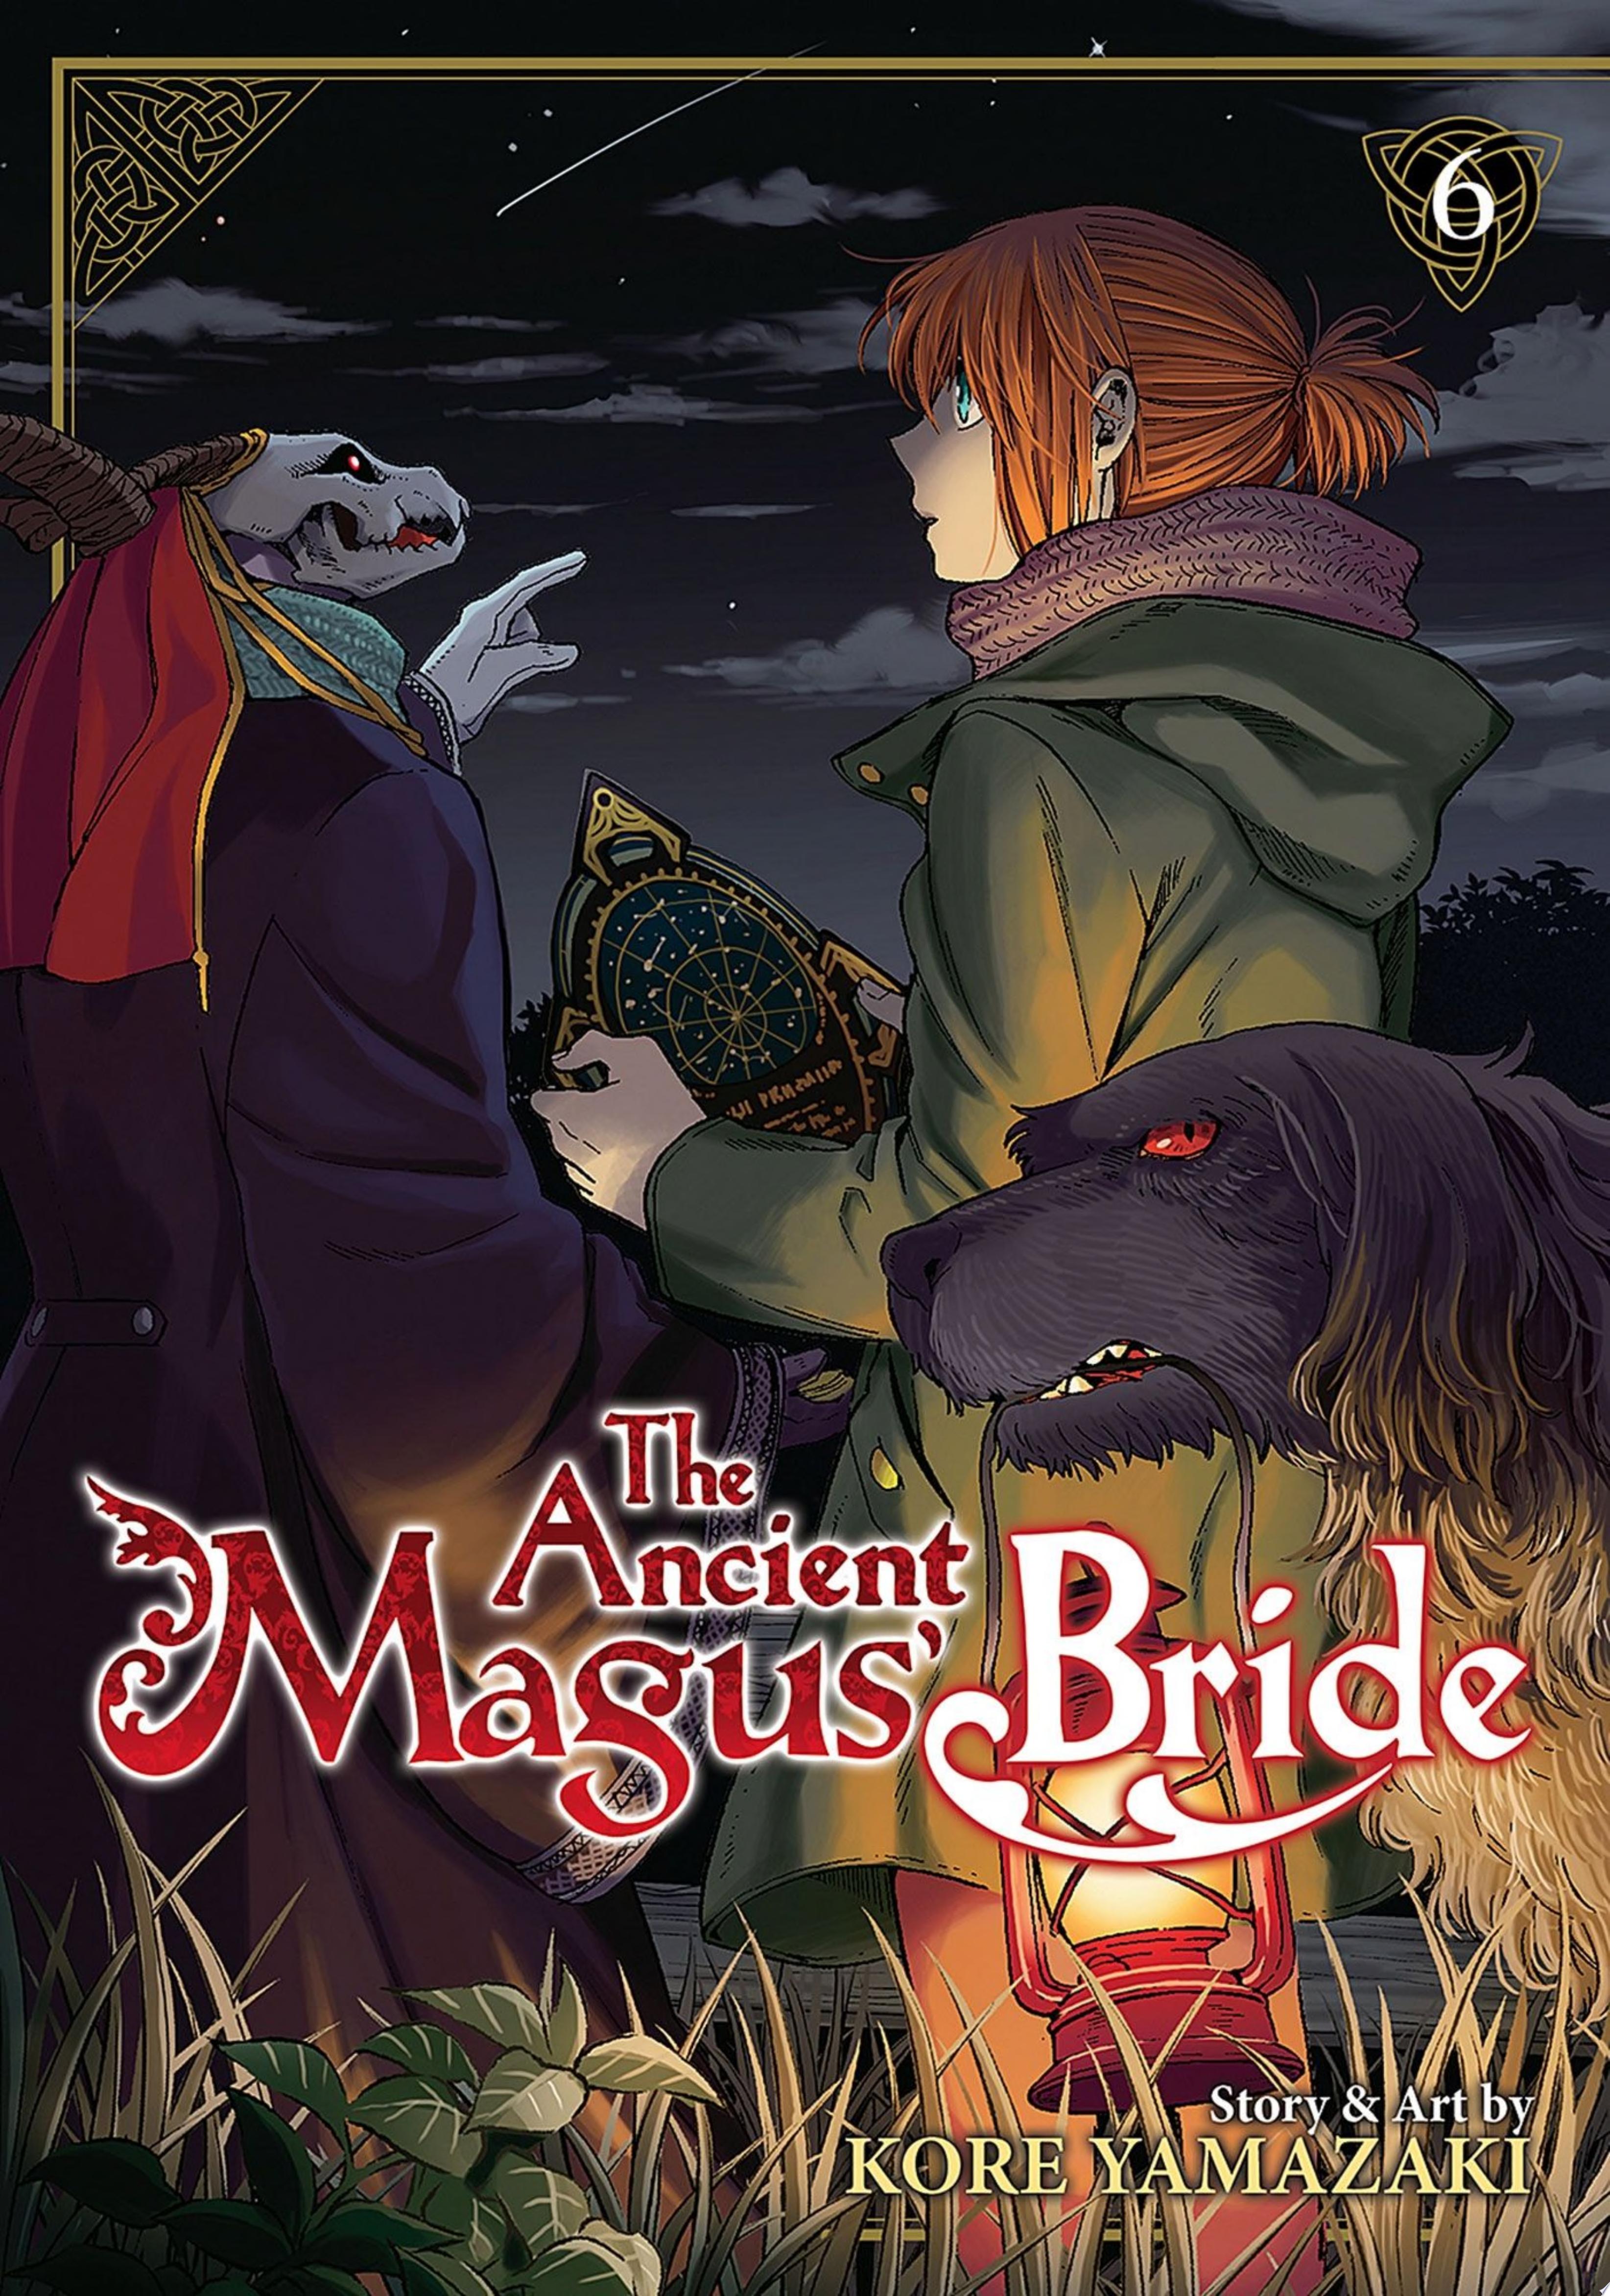 The Ancient Magus' Bride Prequel, Knight's & Magic Win the Summer